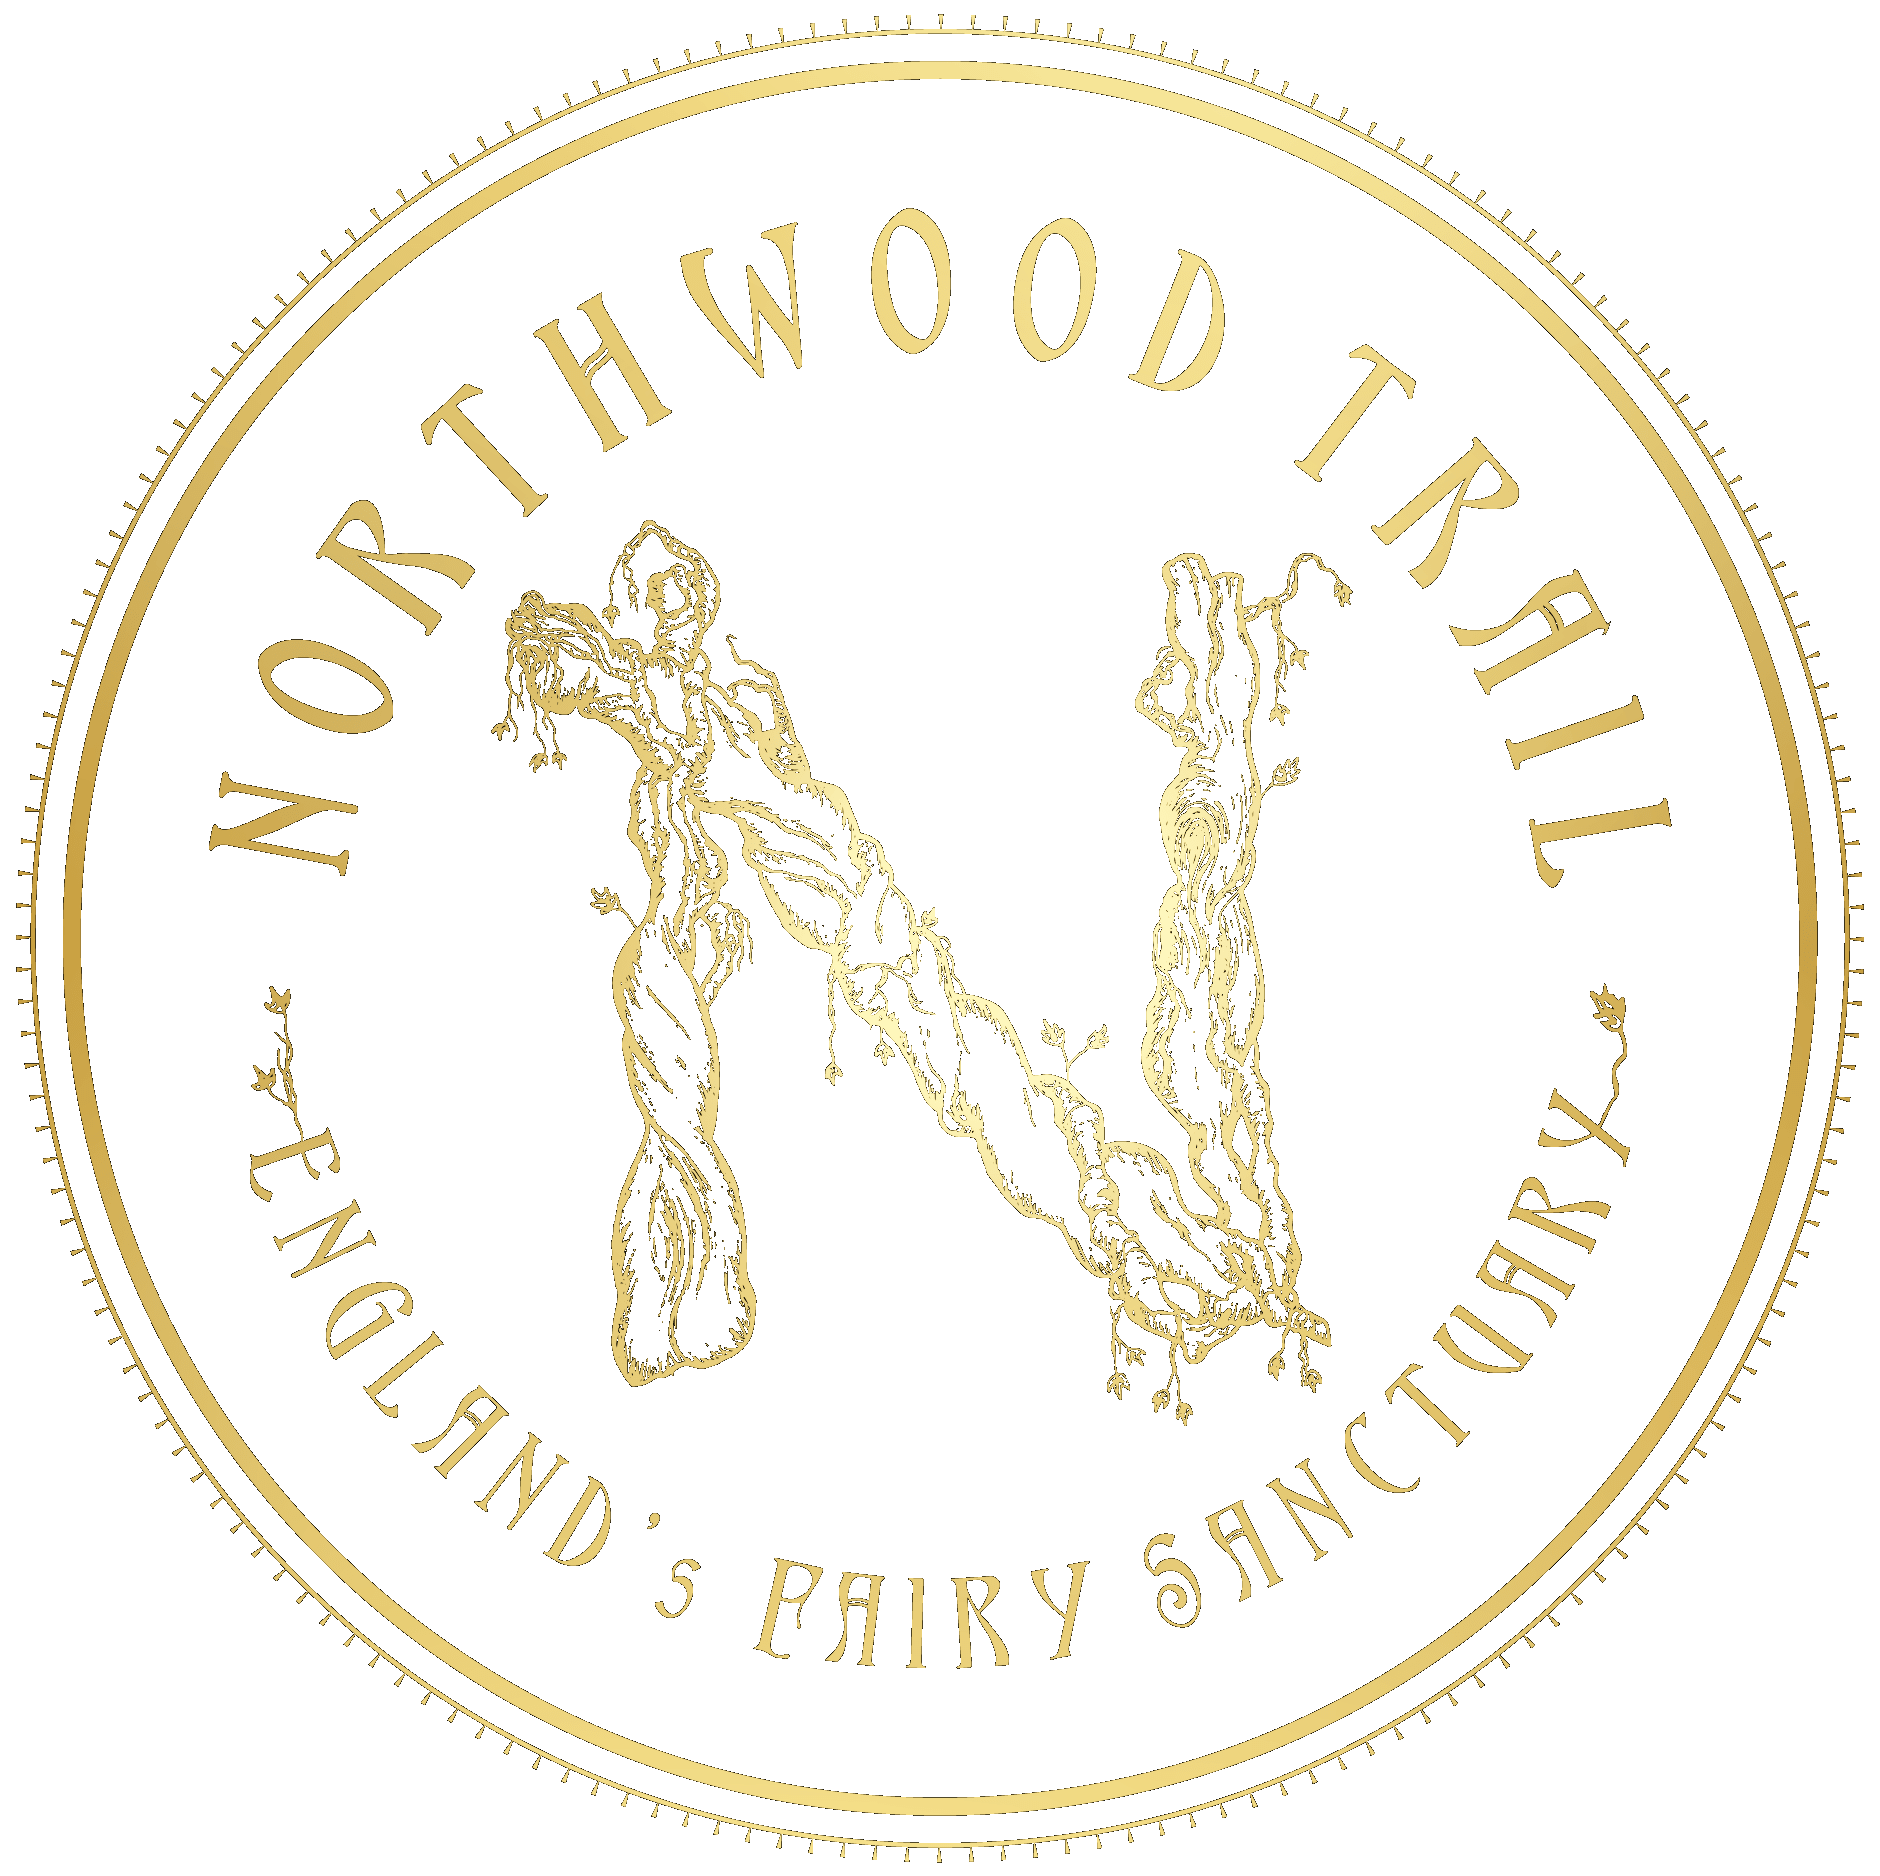 Outdoor café near York, Woodland attractions York, Northwood trail